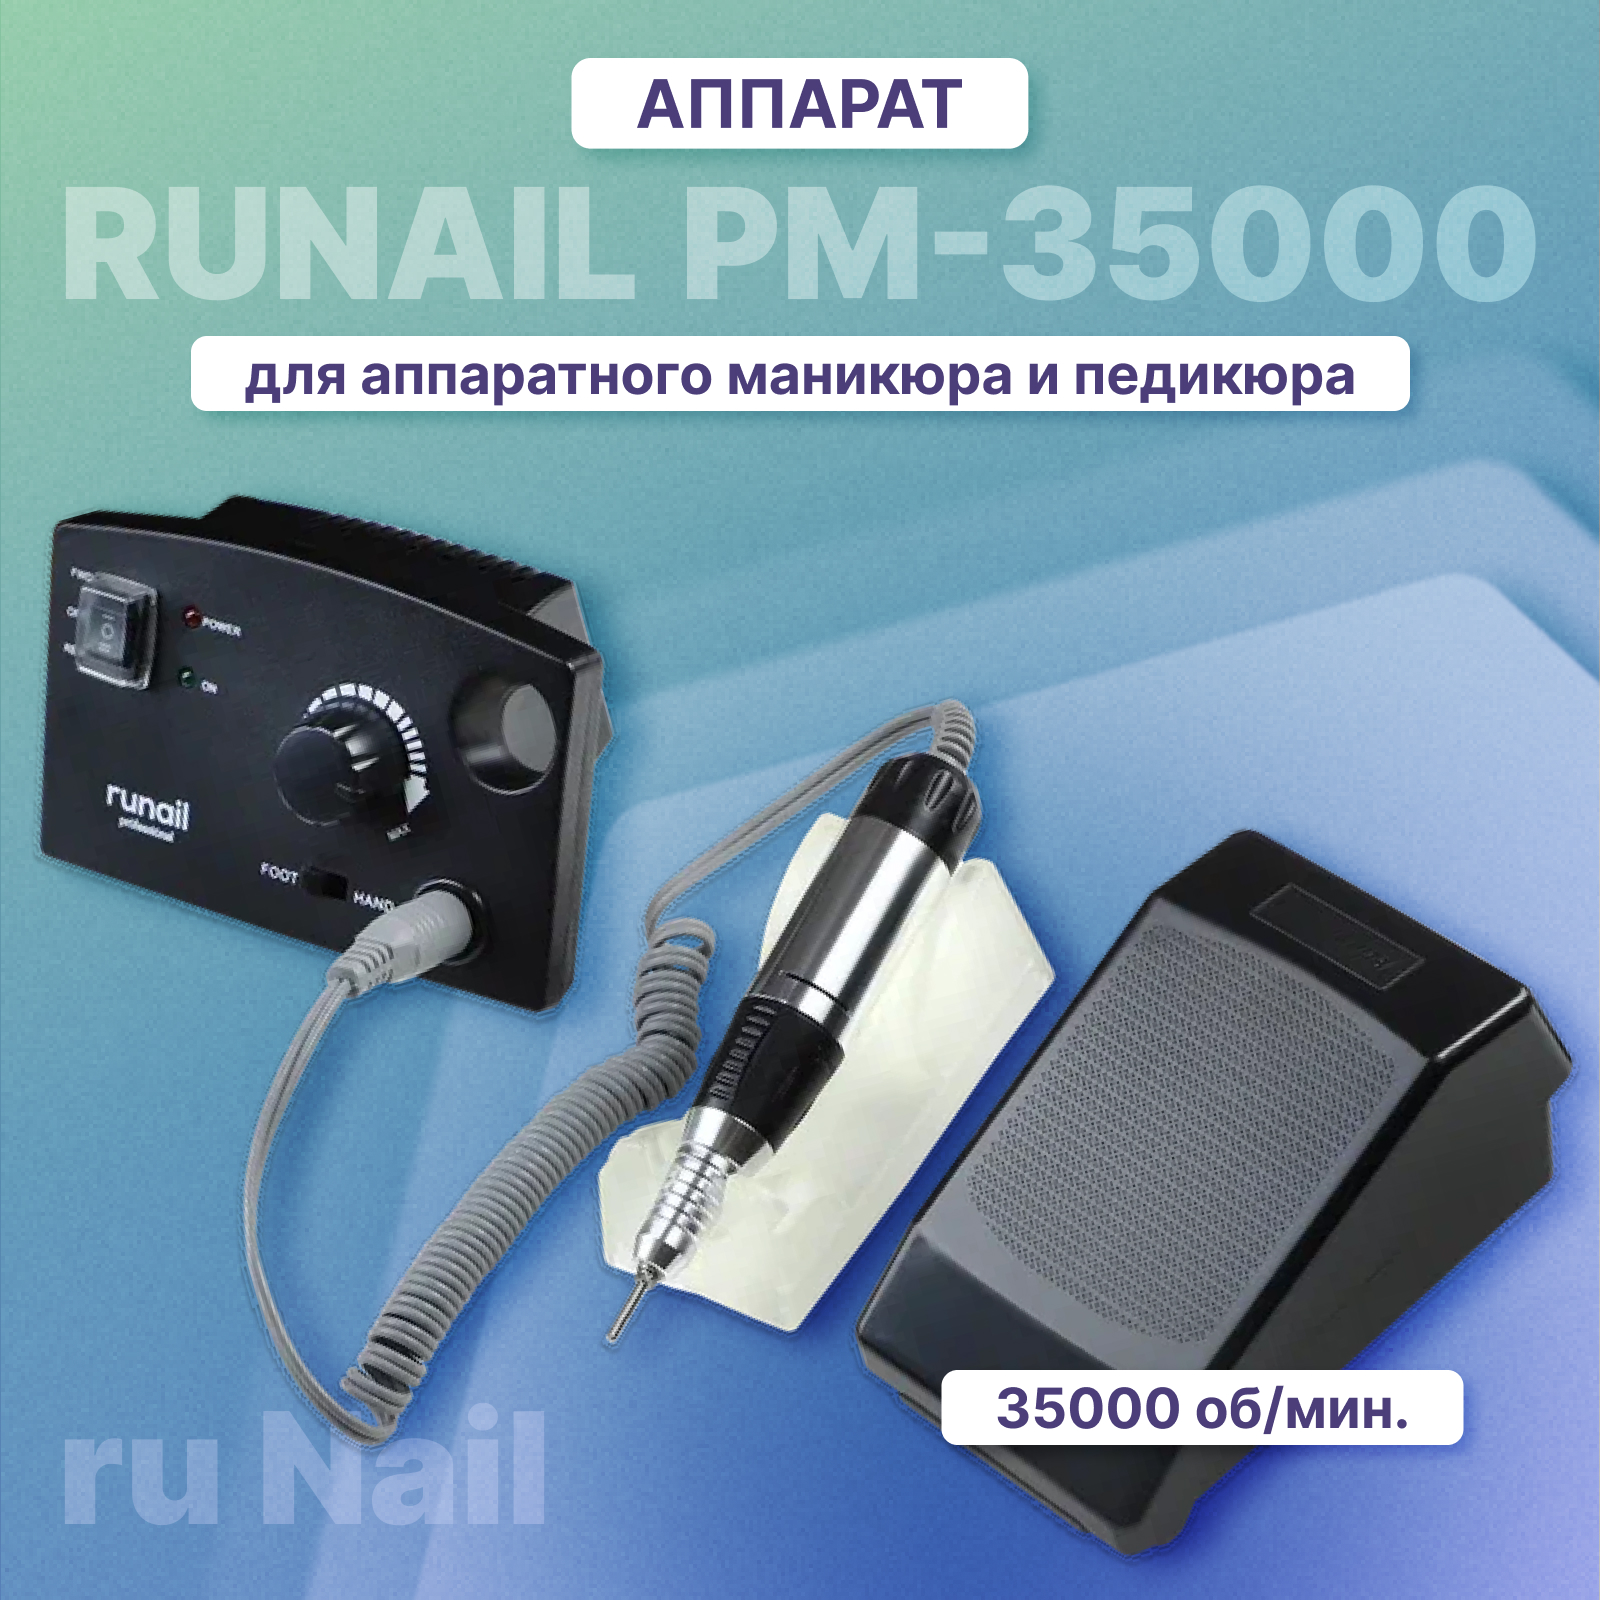 Аппарат для маникюра RuNail Professional PM-35000